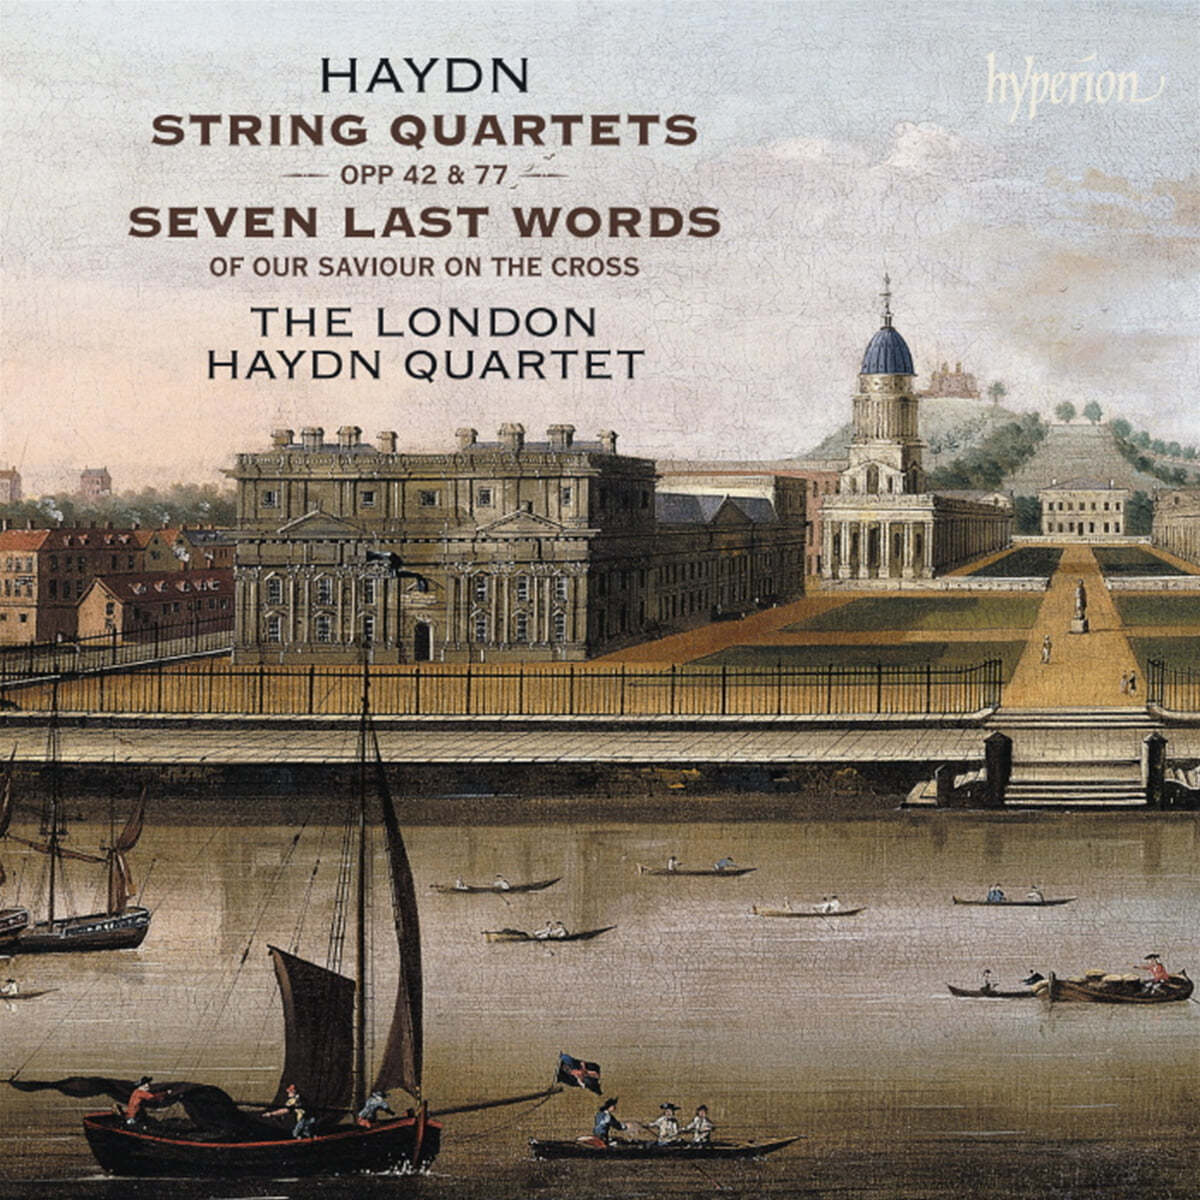 The London Haydn Quartet 하이든: 현악 4중주, 십자가 위의 일곱 말씀 (Haydn: String Quartets Op. 42 &amp; 77, Seven Last Words)